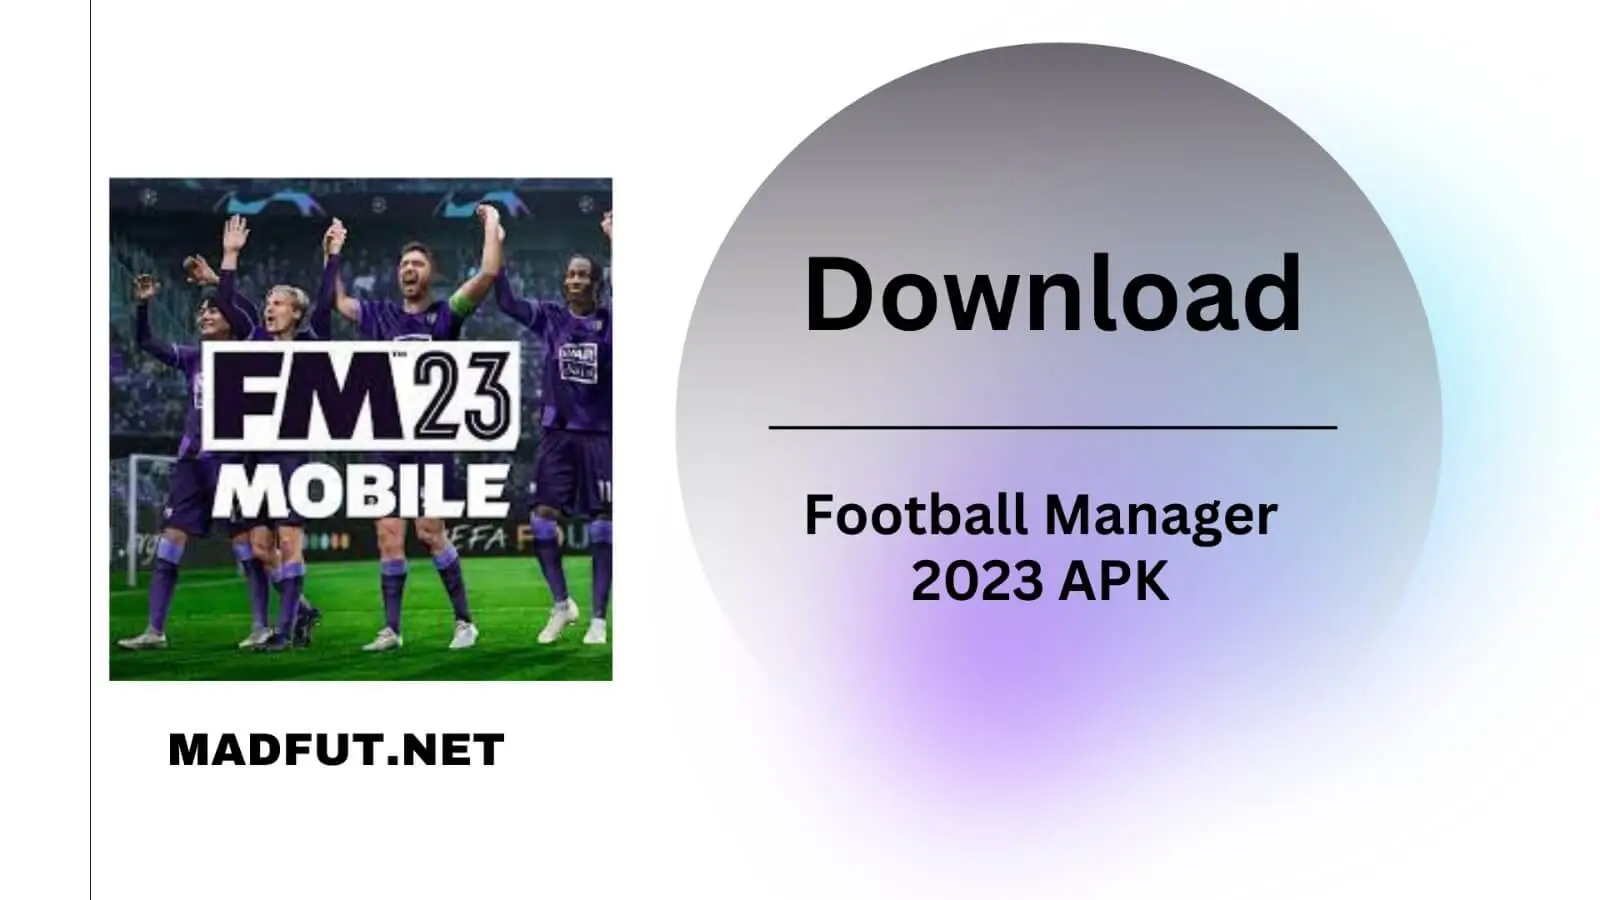 Football Manager 2023 APK